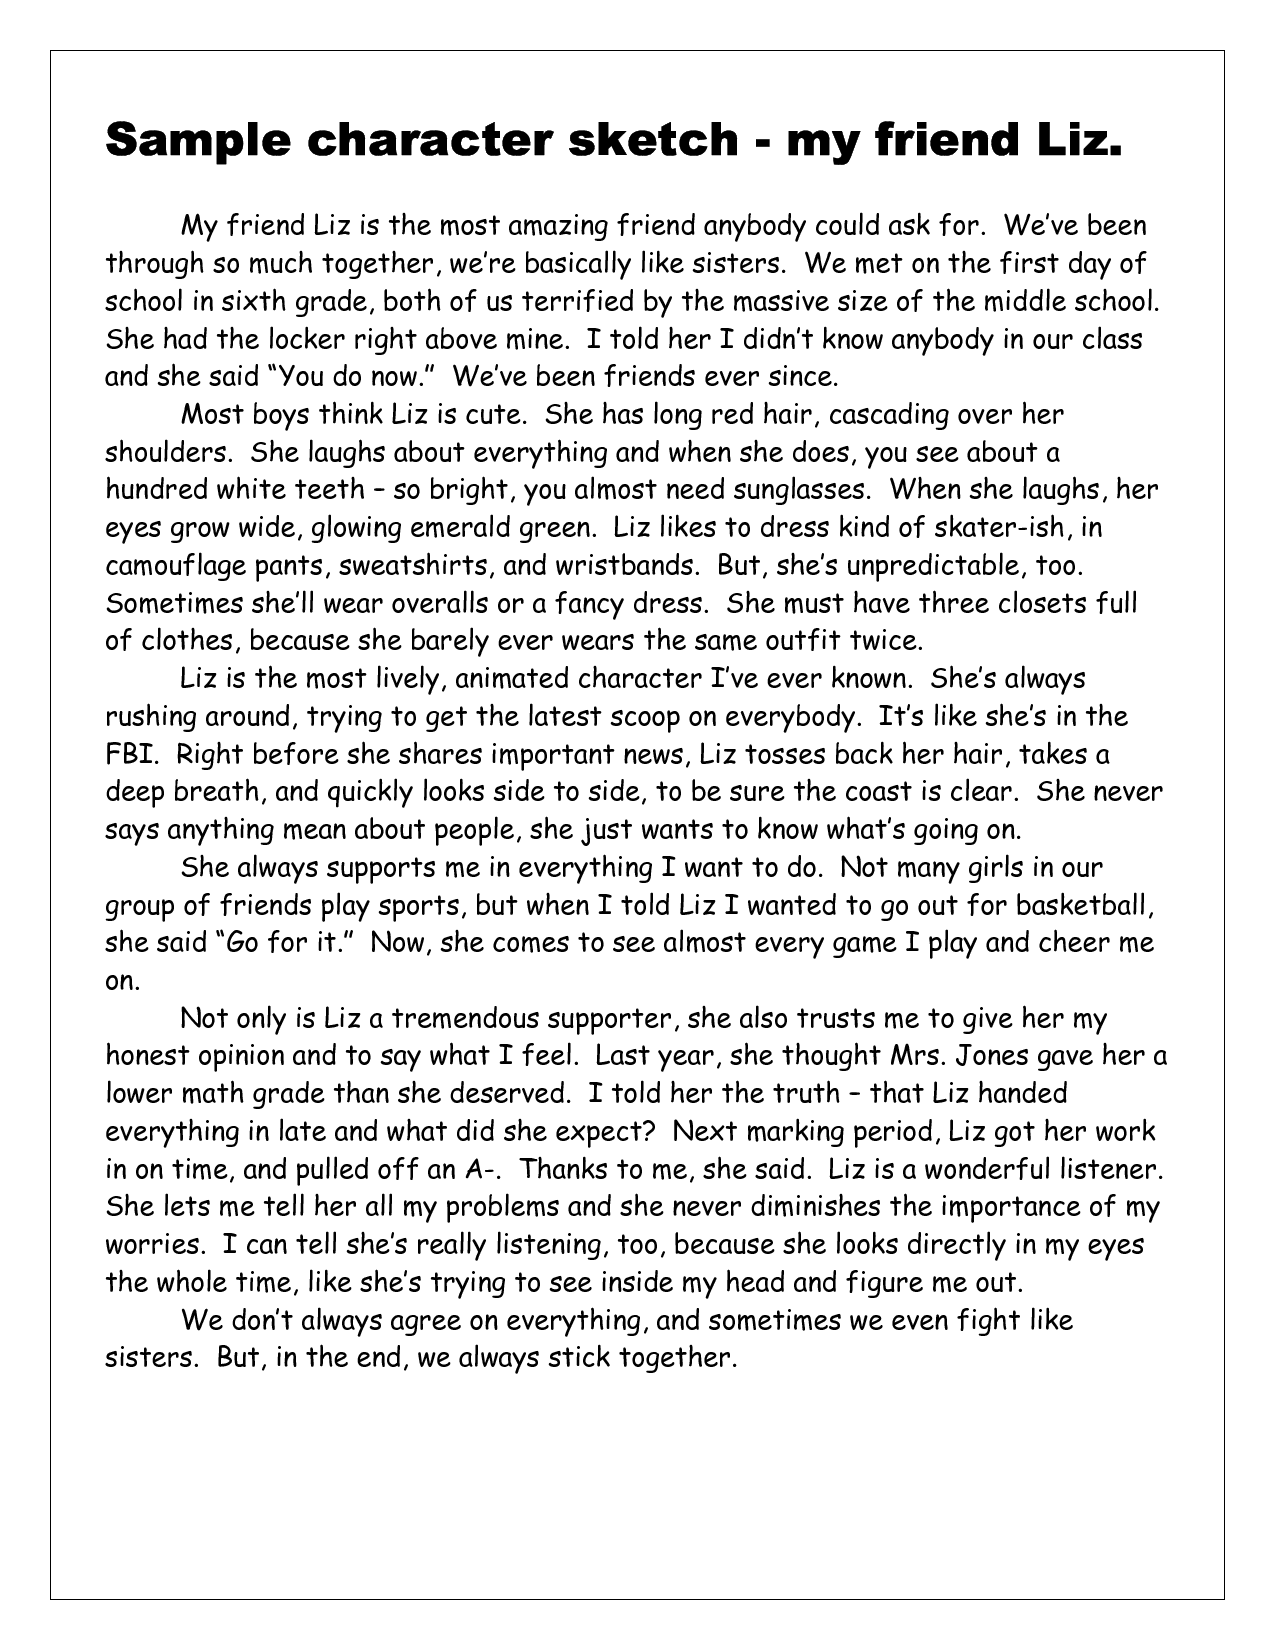 An essay on best friend